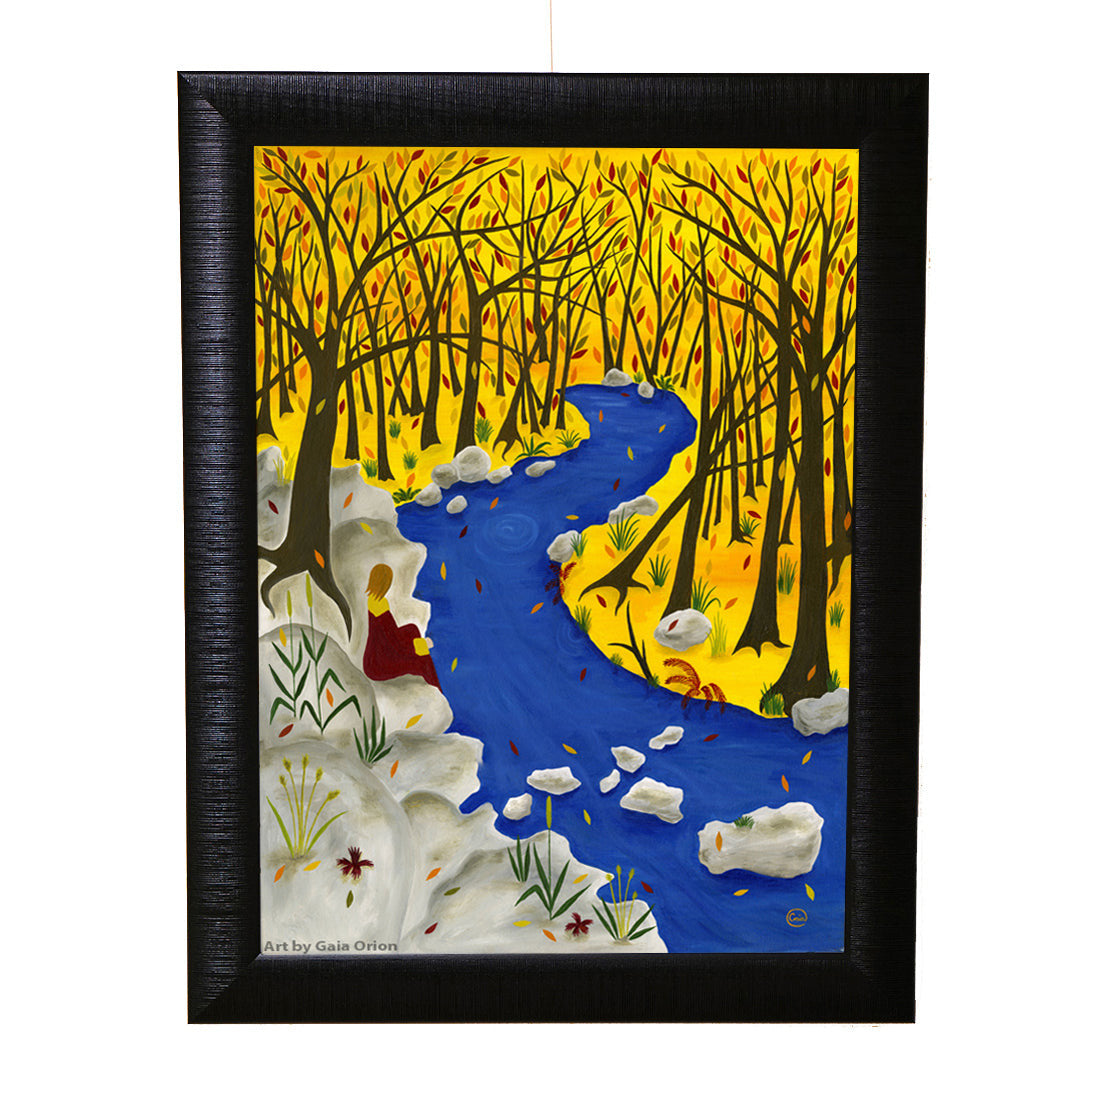 Autumn Reflection - Oil on Canvas - 75 x 55 cm